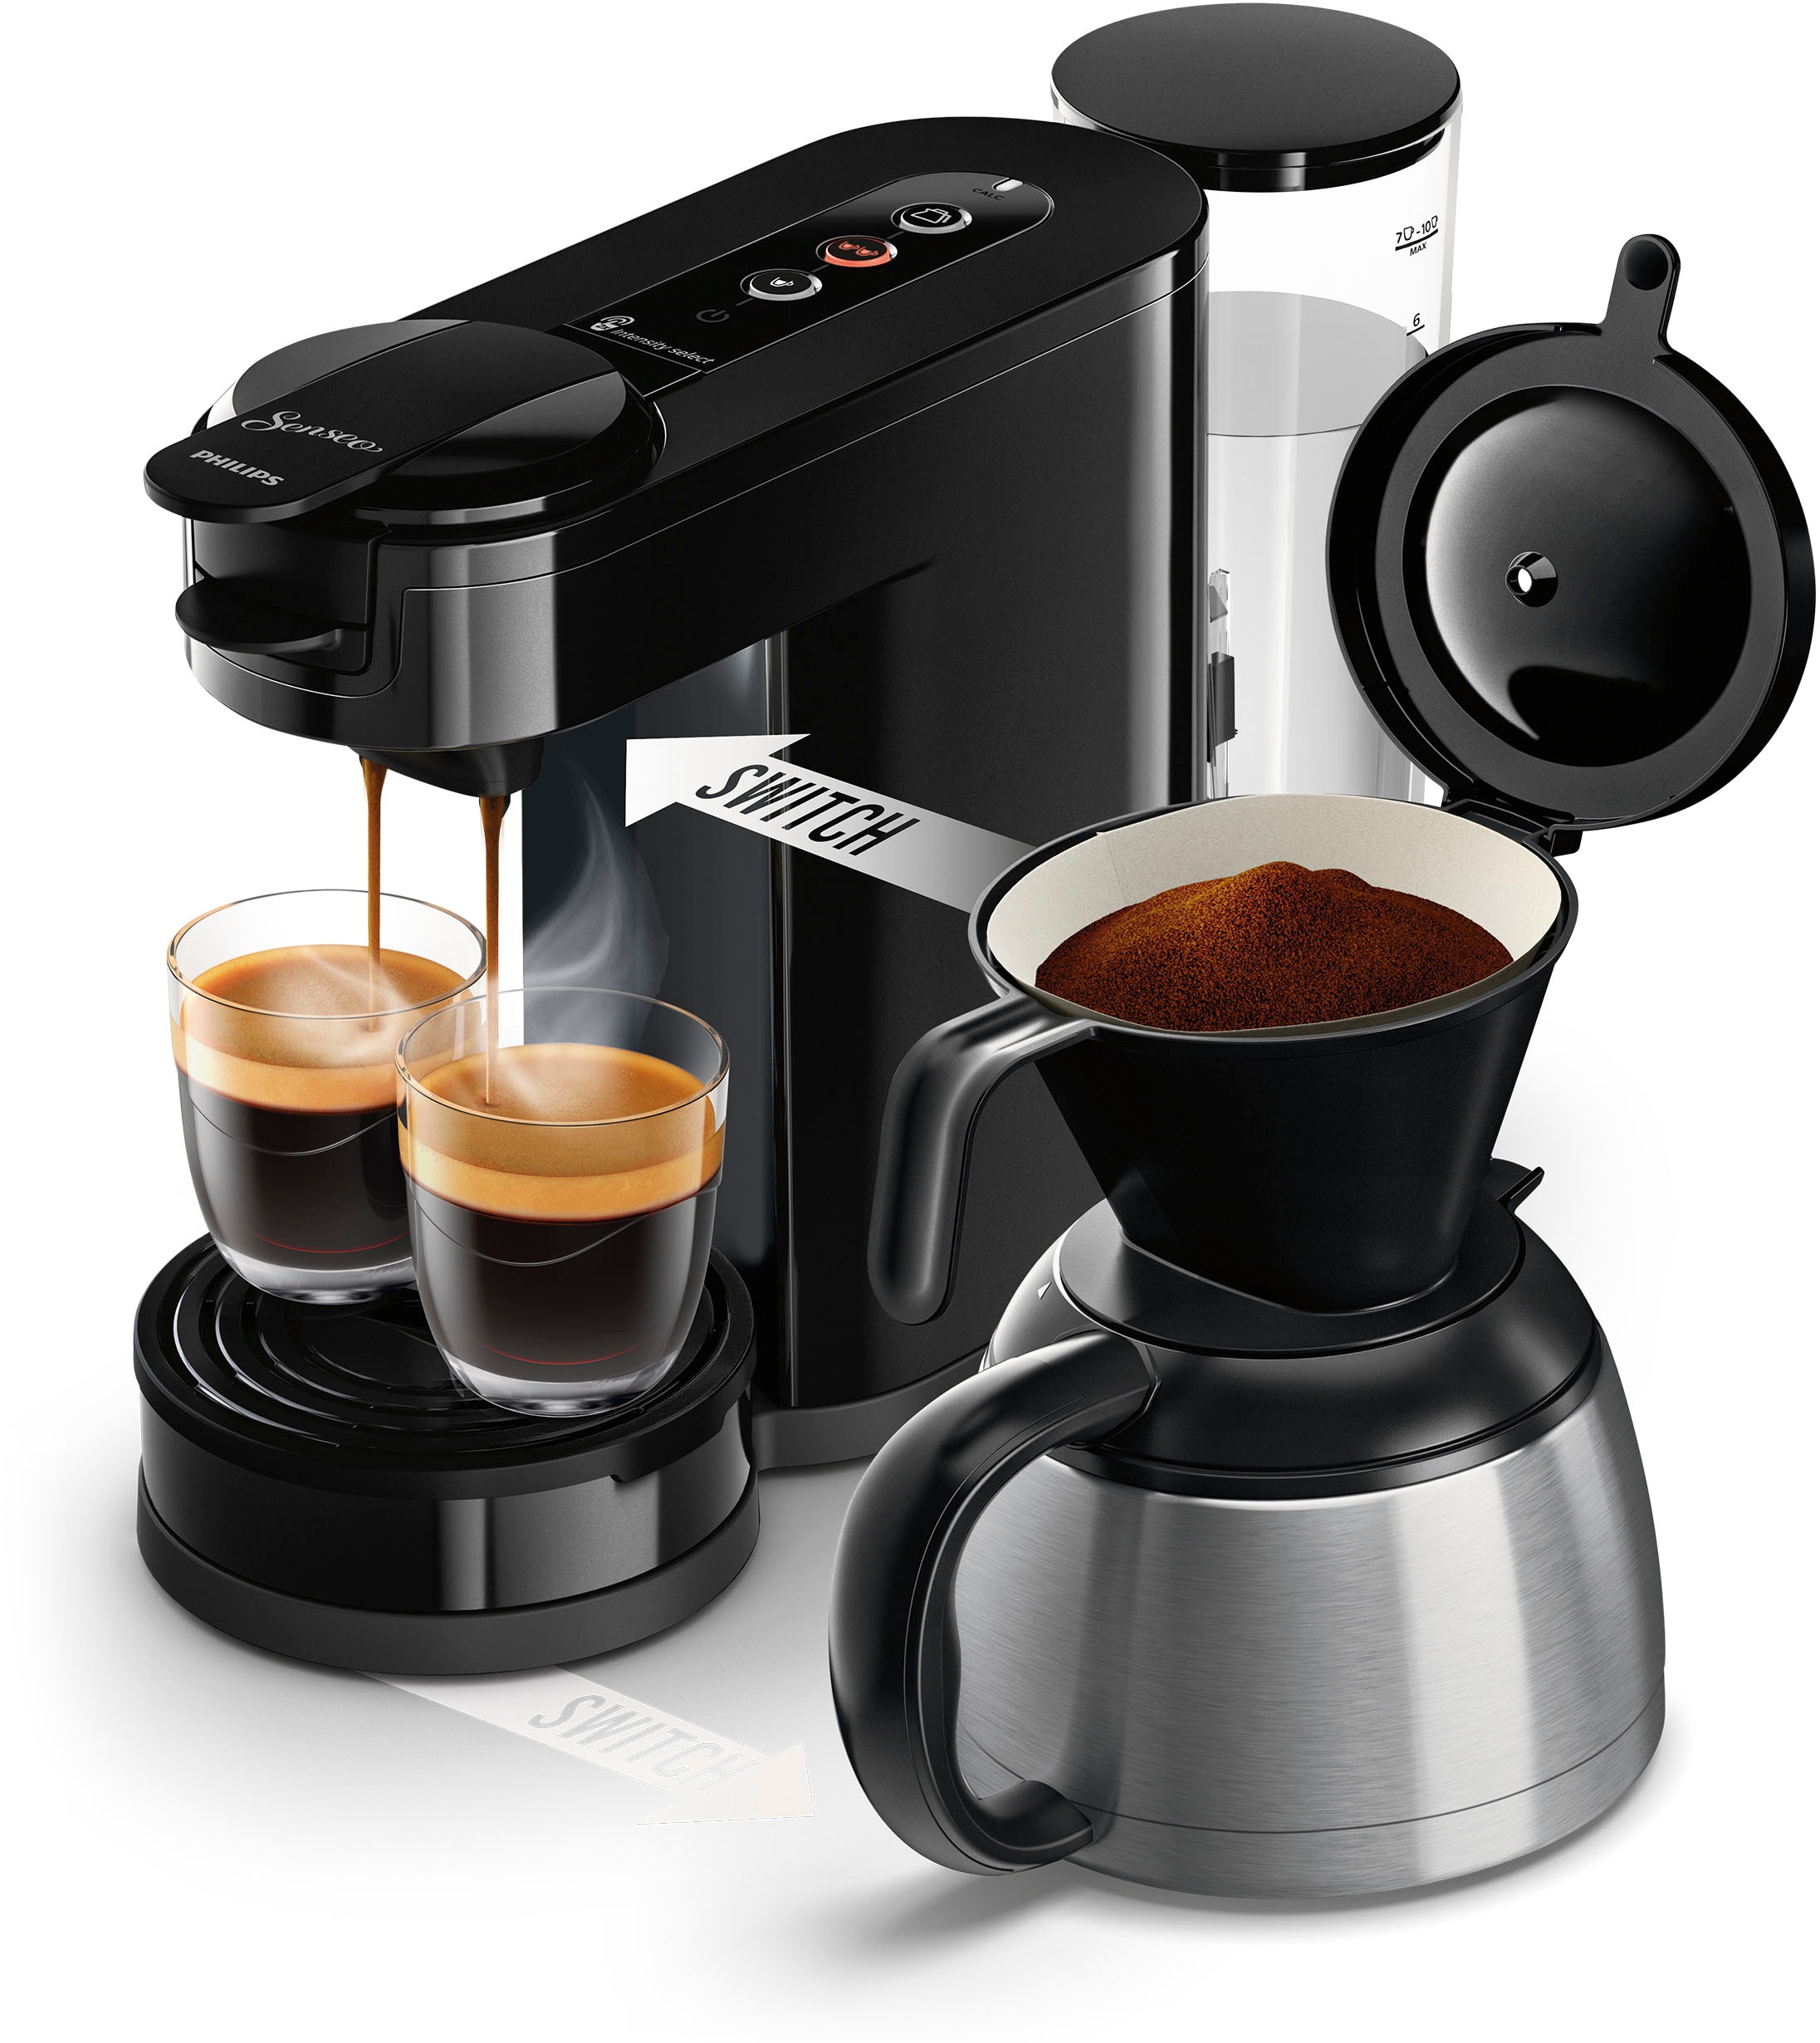 Philips Senseo Kaffeepadmaschine »Switch Boost Kaffee Kaffeekanne, Crema Plastik, inkl. kaufen online Wert €9,90 Technologie«, 1 recyceltem l UVP Kaffeepaddose Plus, HD6592/64, 26